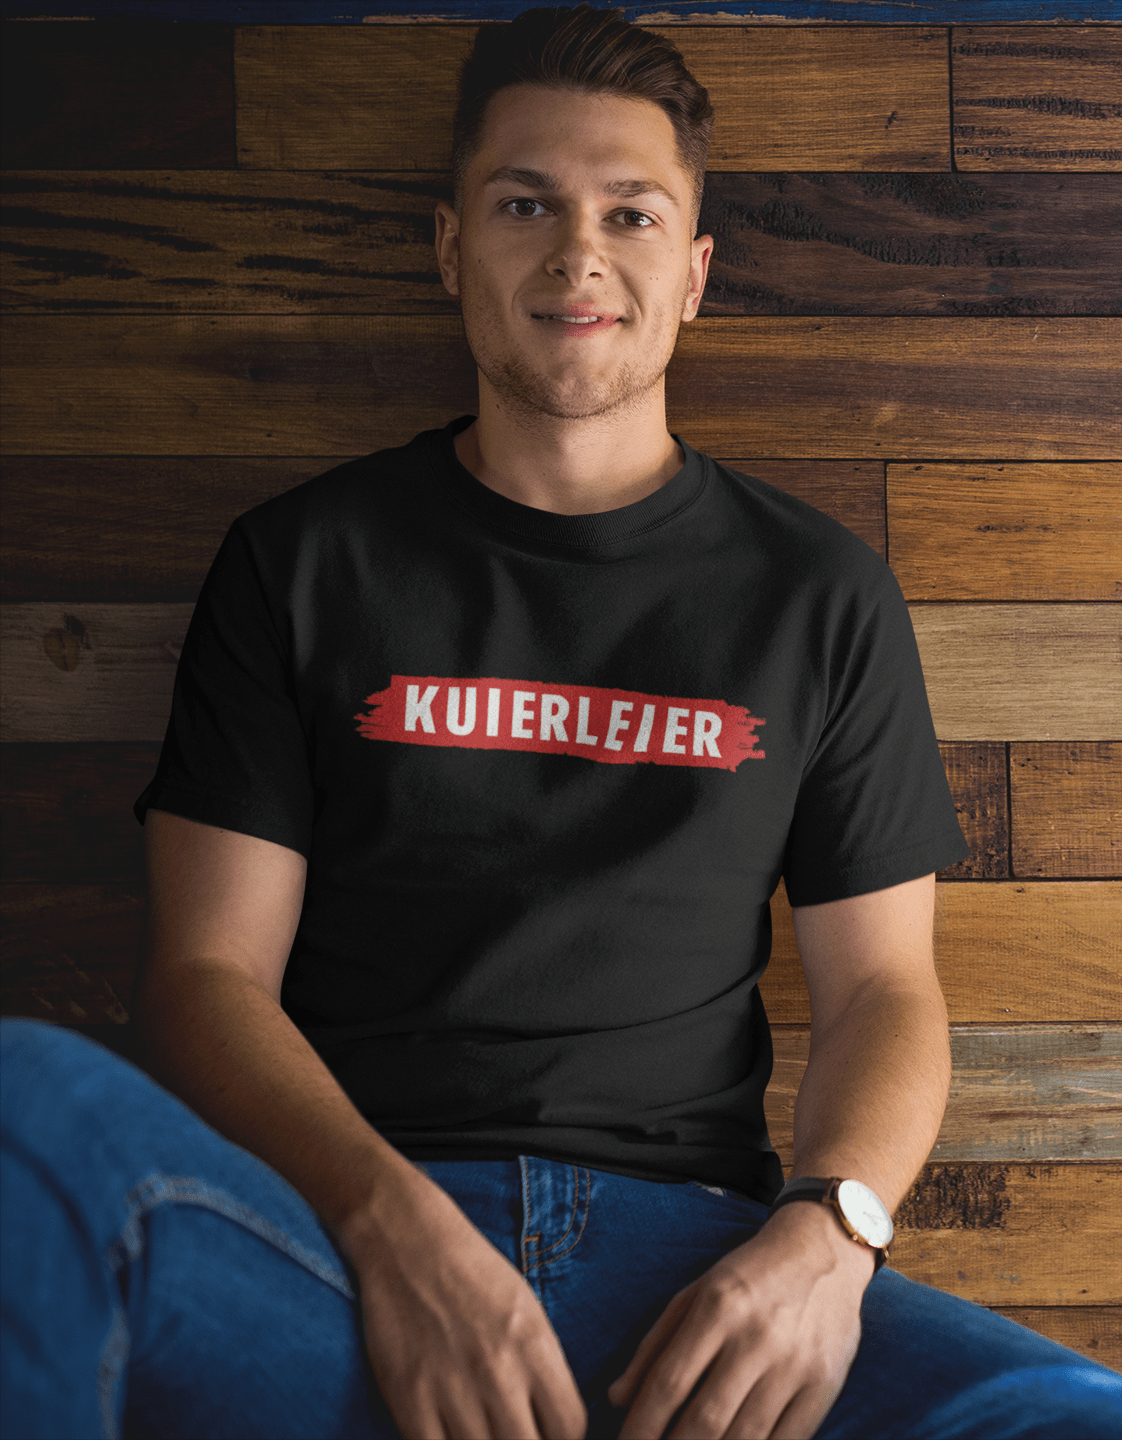 Idees Vol Vrees® "KUIERLEIER" Rooi/Wit Men's T-shirt